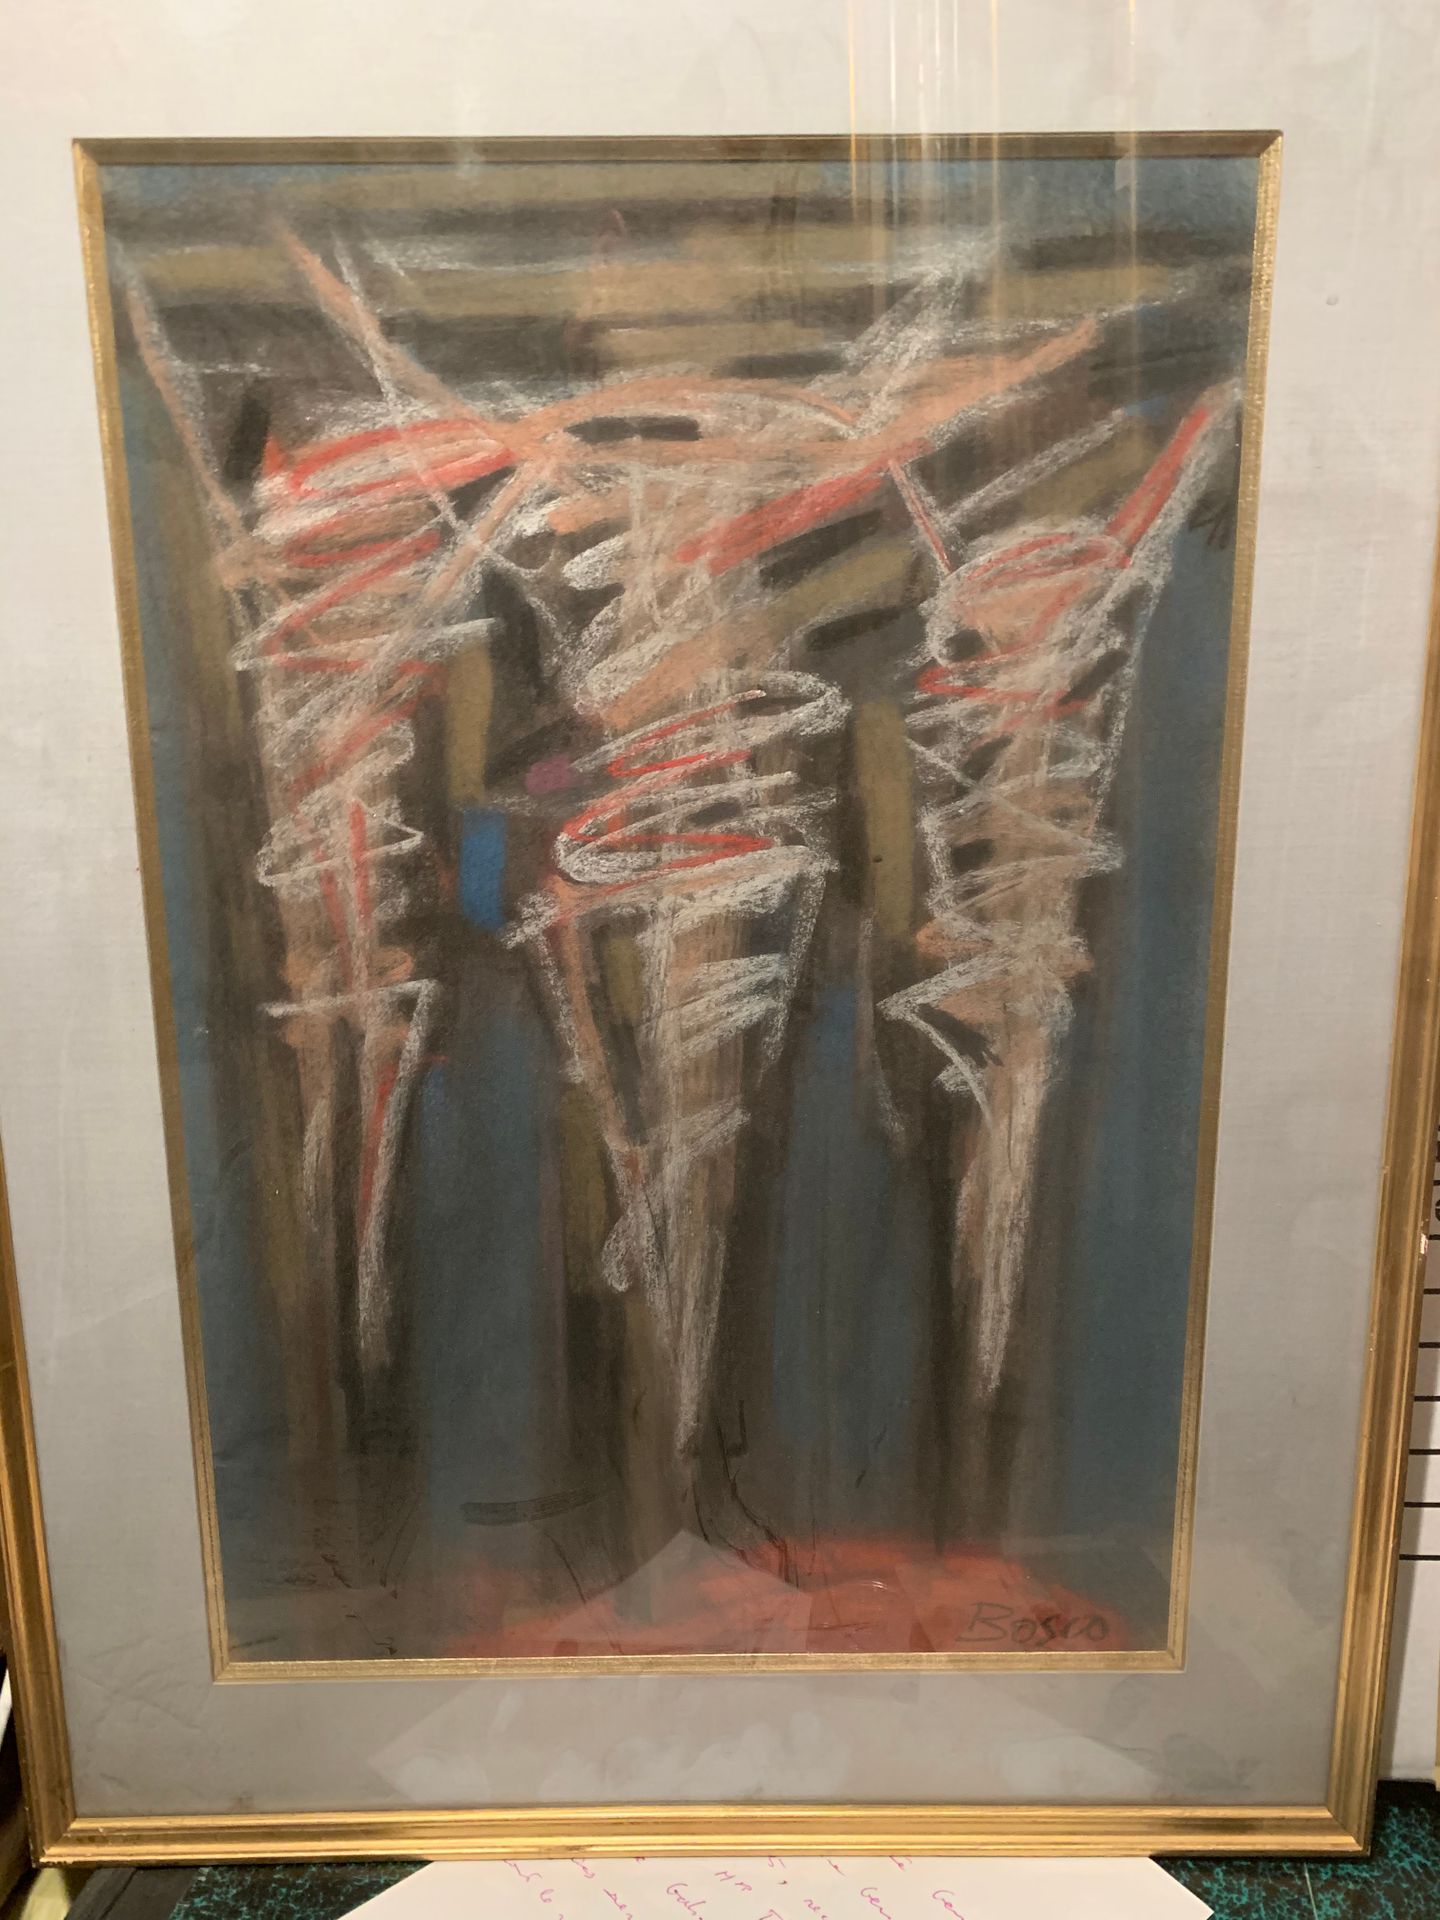 Null 皮埃尔-博斯克 (1909-1993)

髑髅地

右下角有签名的粉彩画